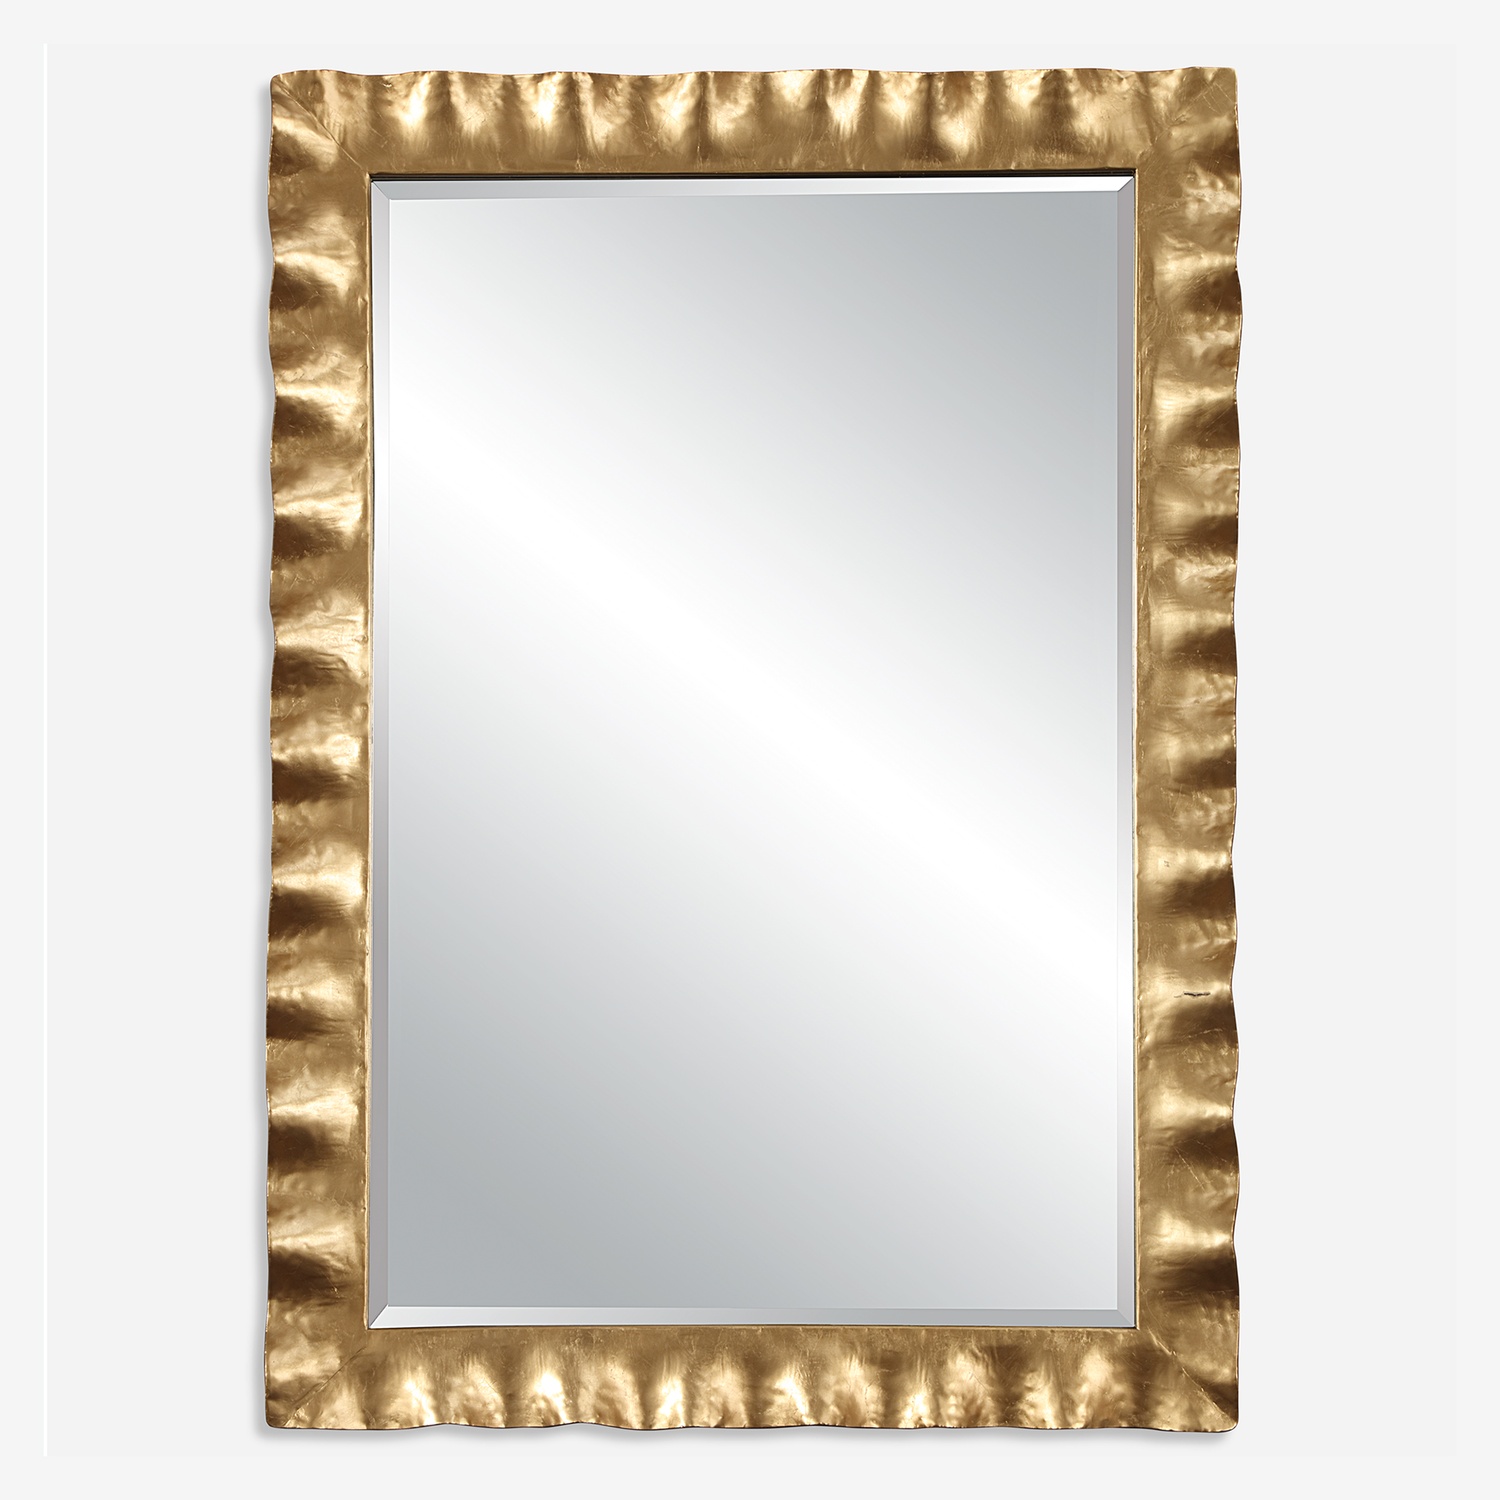 Haya-Scalloped Gold Mirror